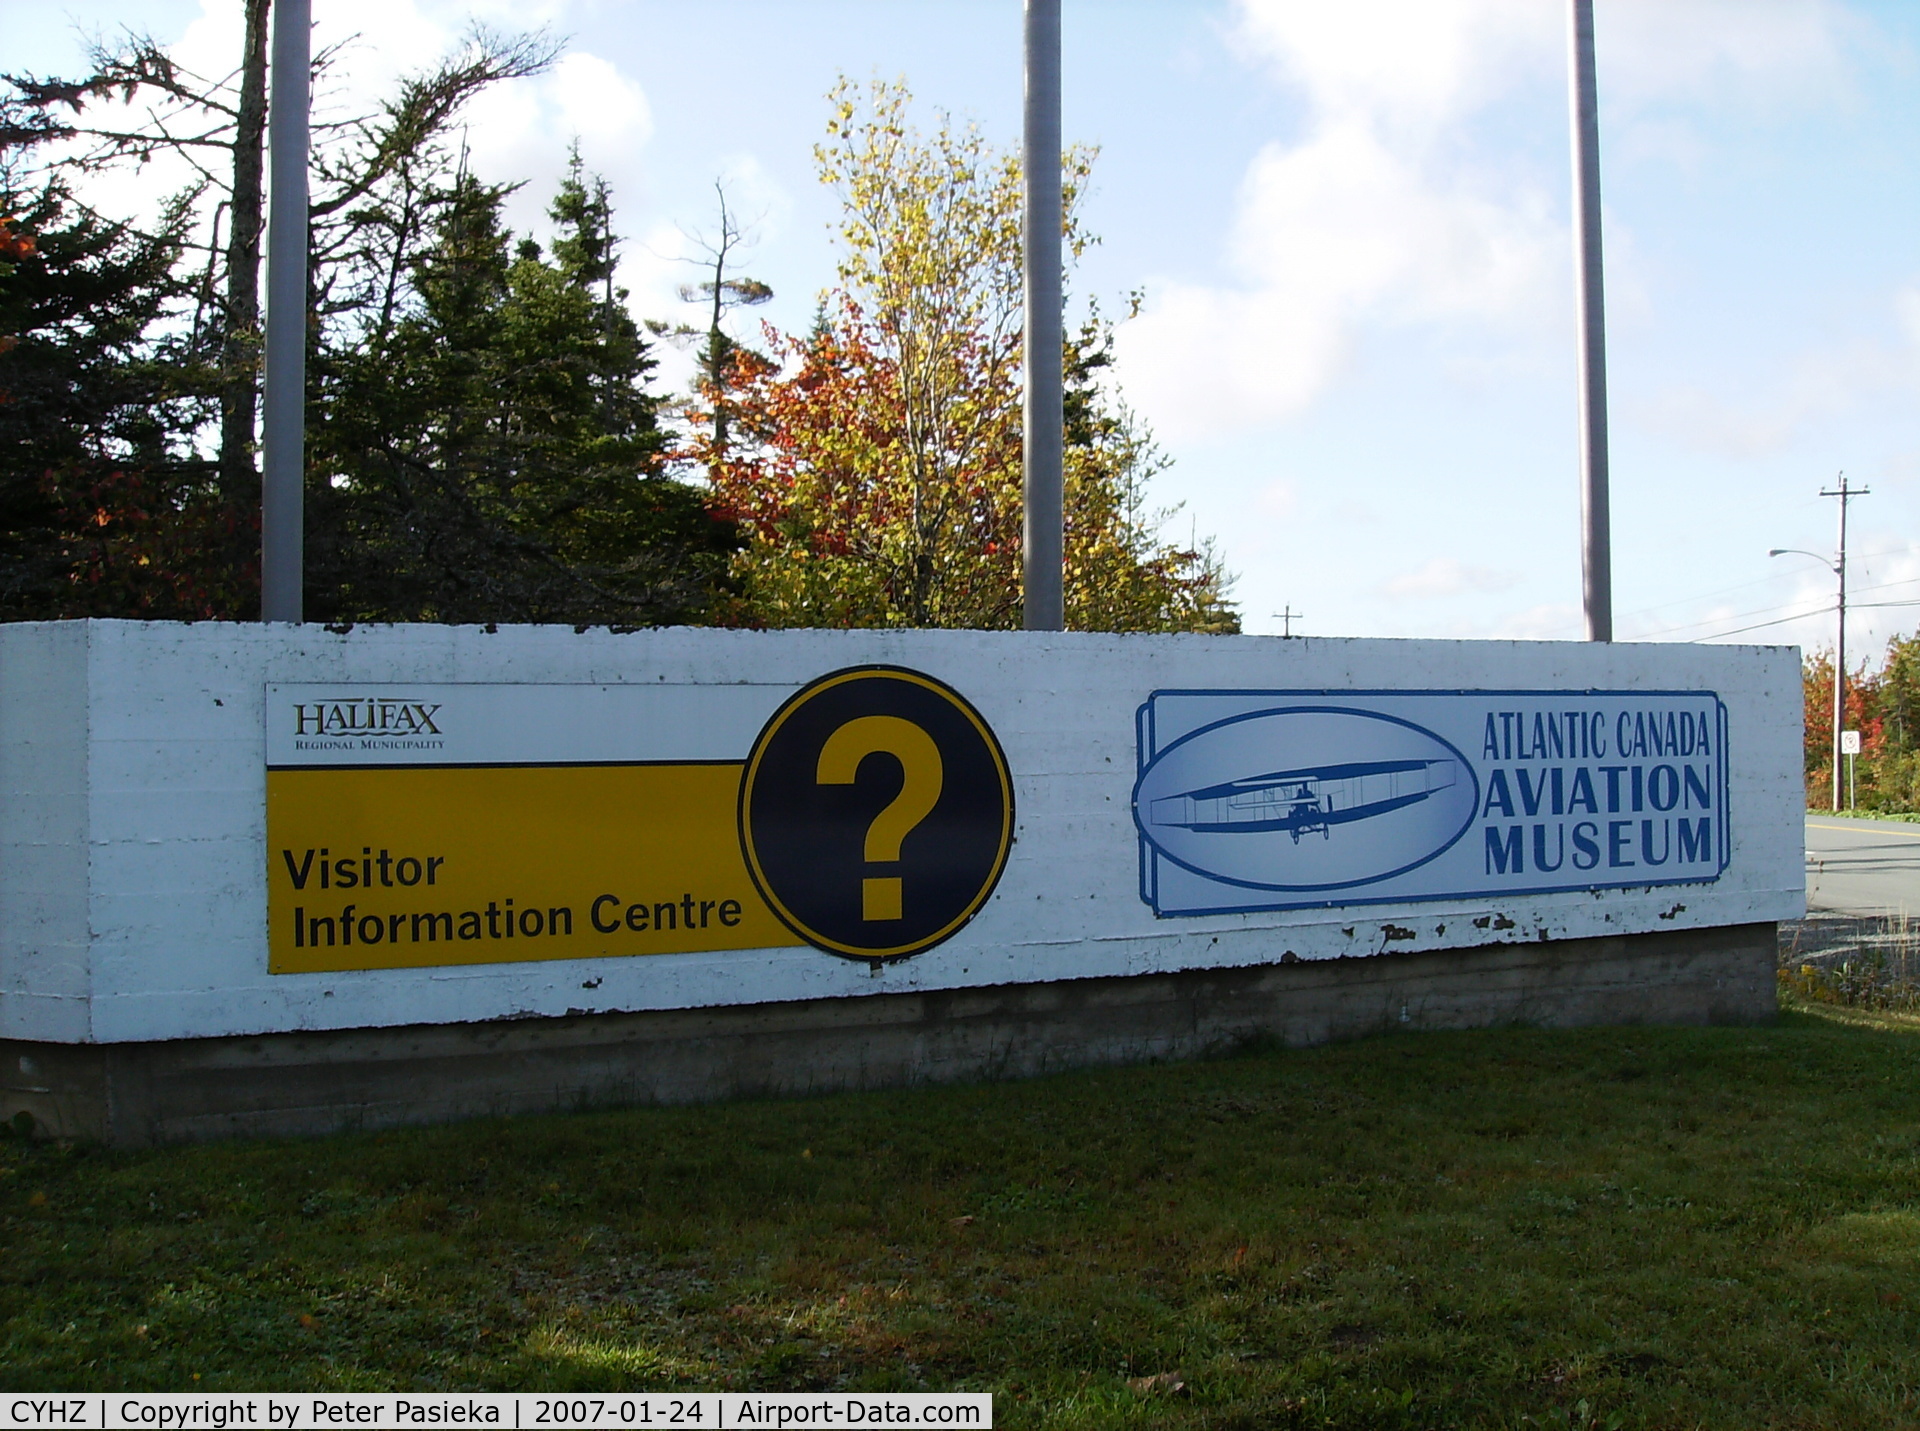 Halifax International Airport, Halifax Regional Municipality, Nova Scotia Canada (CYHZ) - Atlantic Canada Aviation Museum is located across the highway from Halifax International